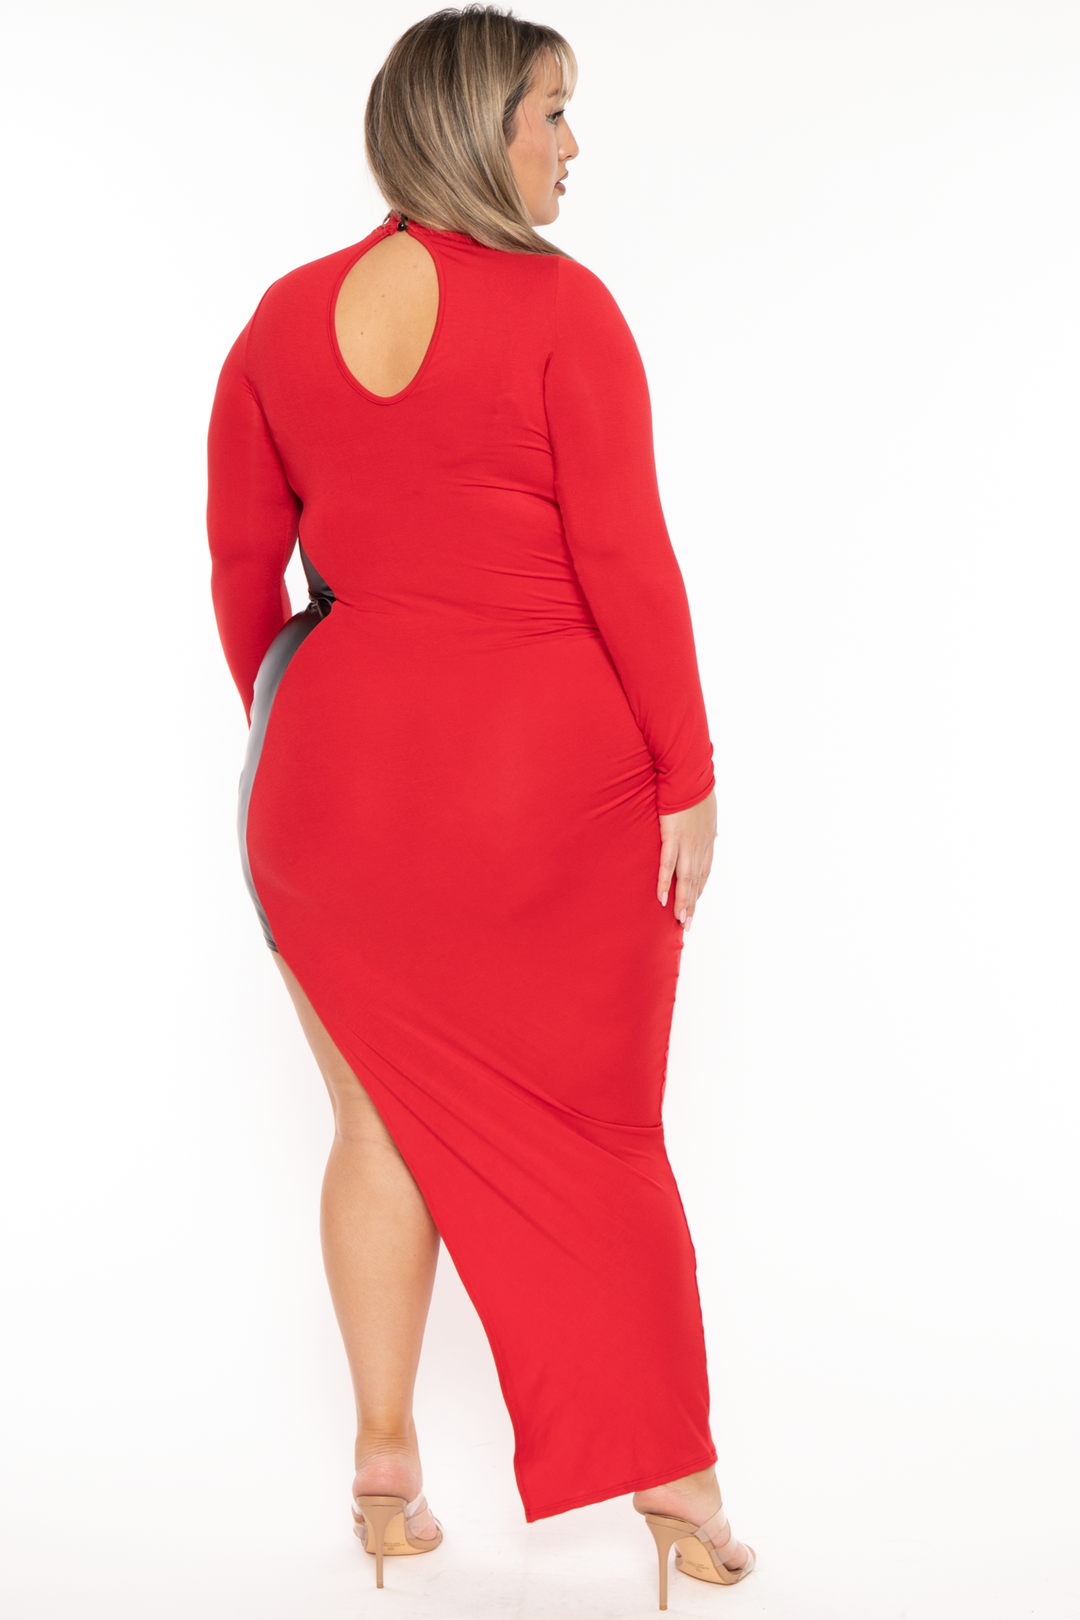 Curvy Sense Dresses Plus Size Melanie Asymmetric Maxi Dress - Red